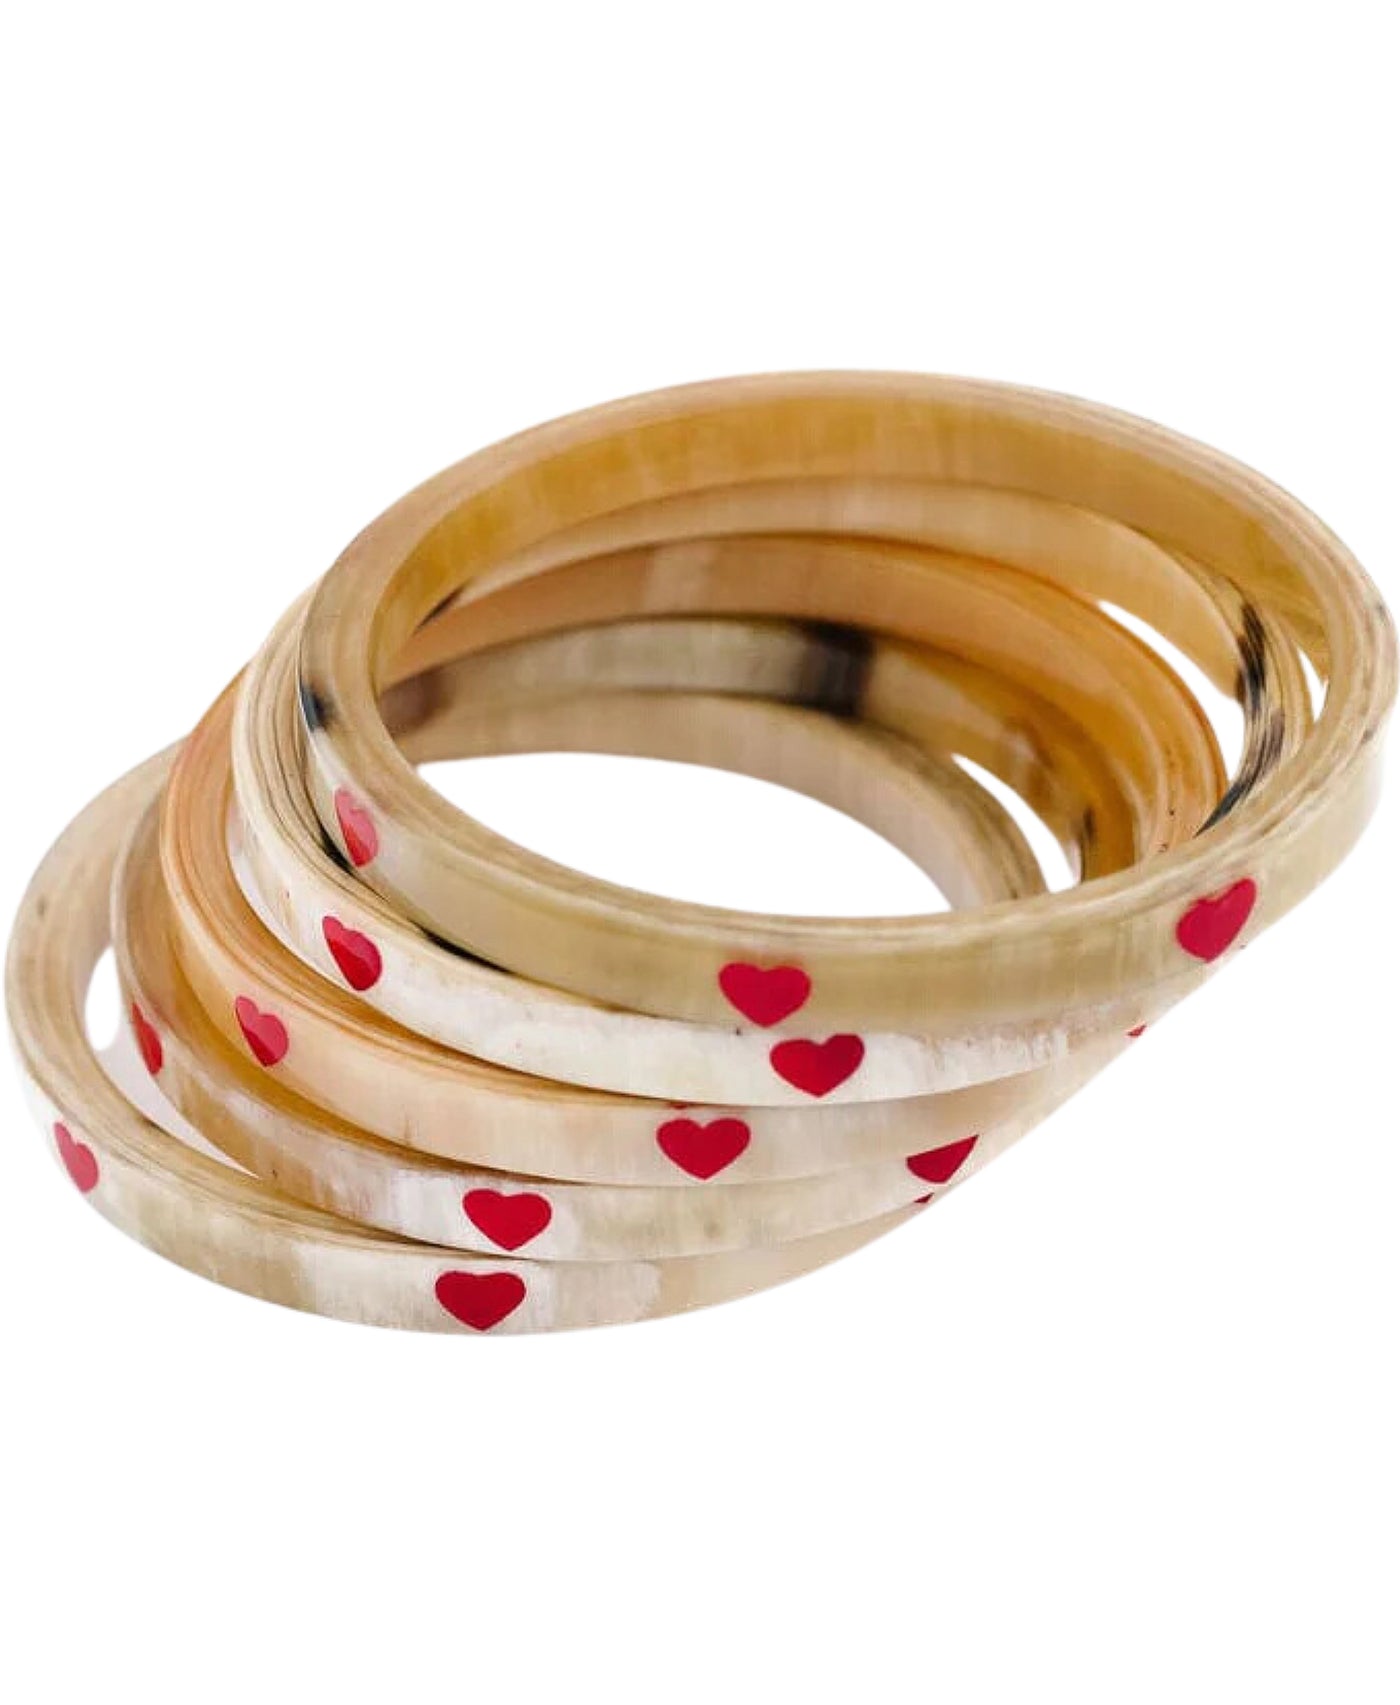 Heart Bangle Bracelet Set image 1